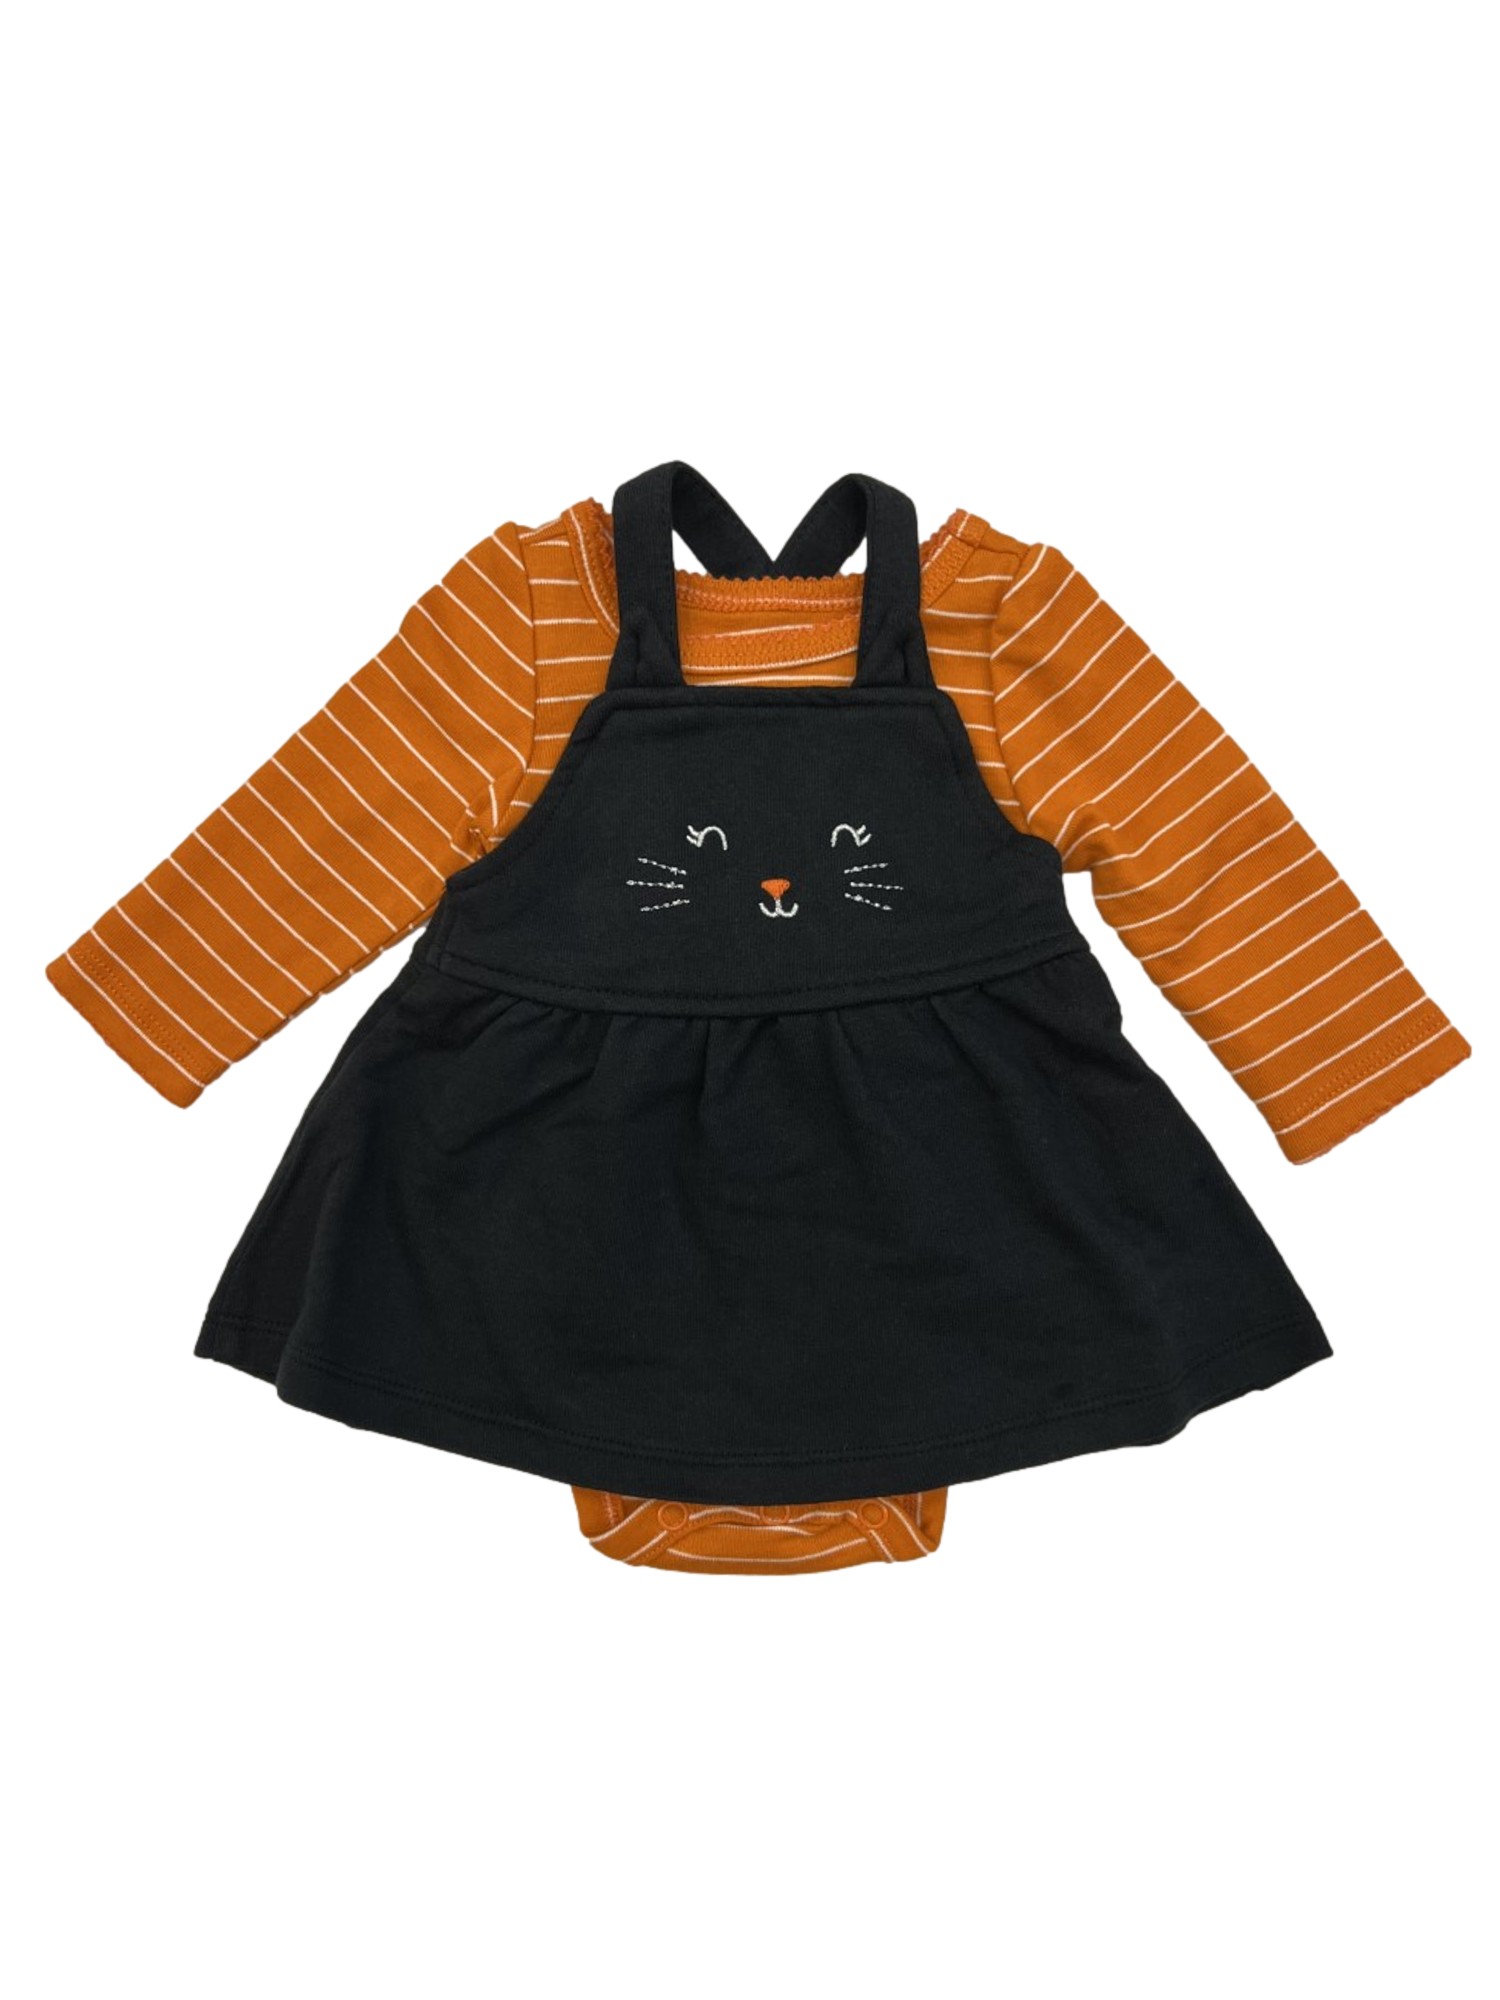 Carter's Carters Infant Girls Halloween 2pc Black Cat Dress & Orange Striped Bodysuit NB